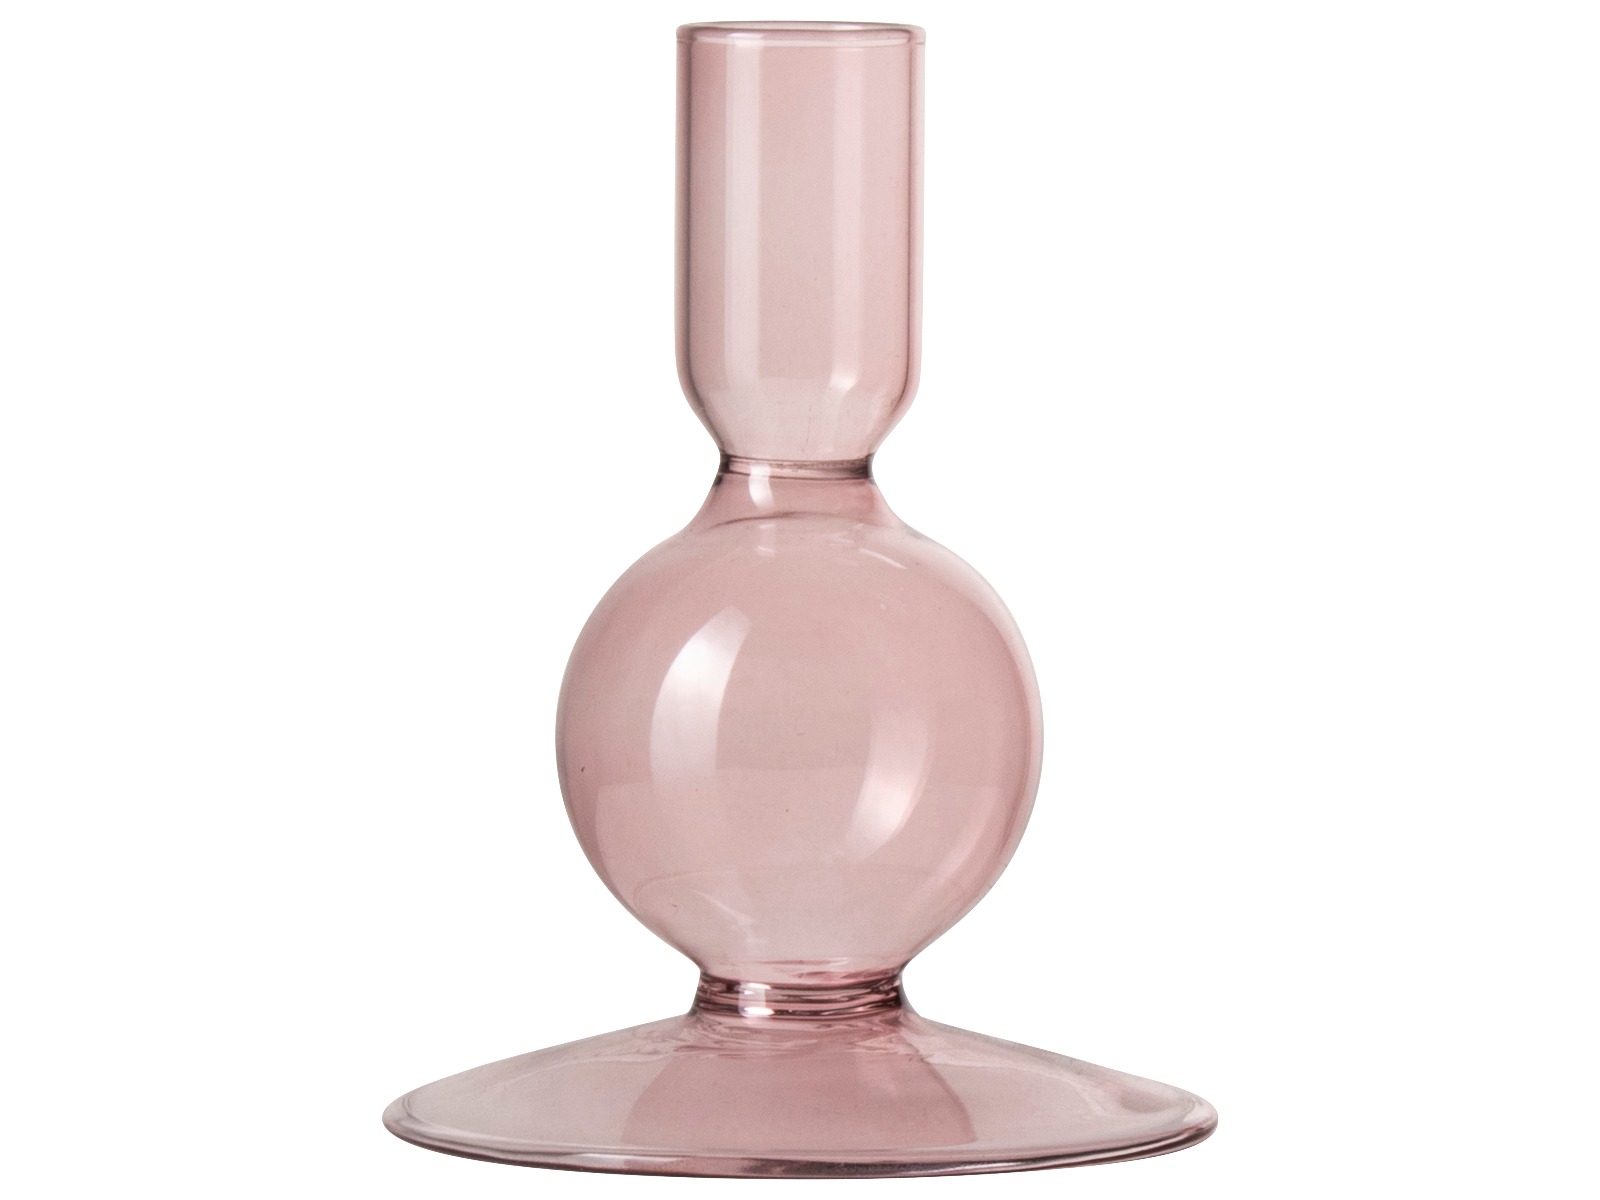 Dinerkaarshouder glas ø9x11cm roze